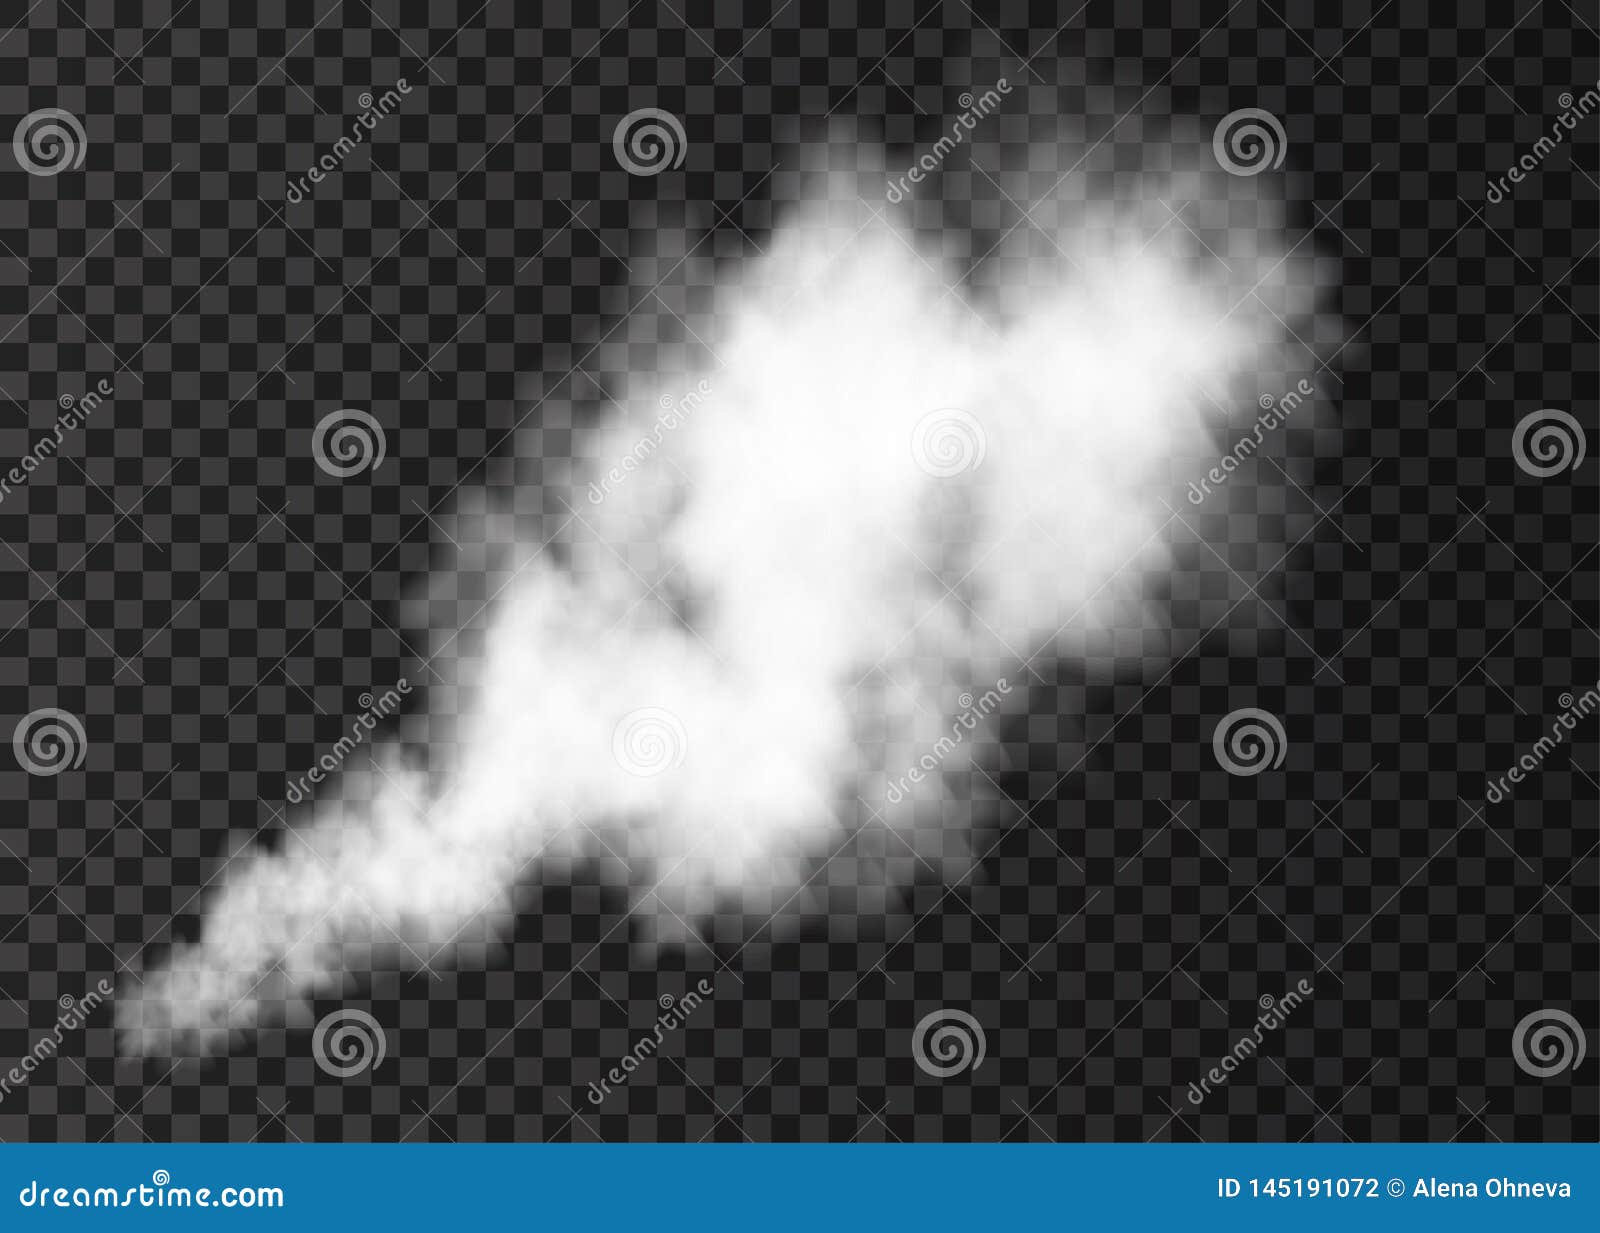 что такое облако steam фото 76